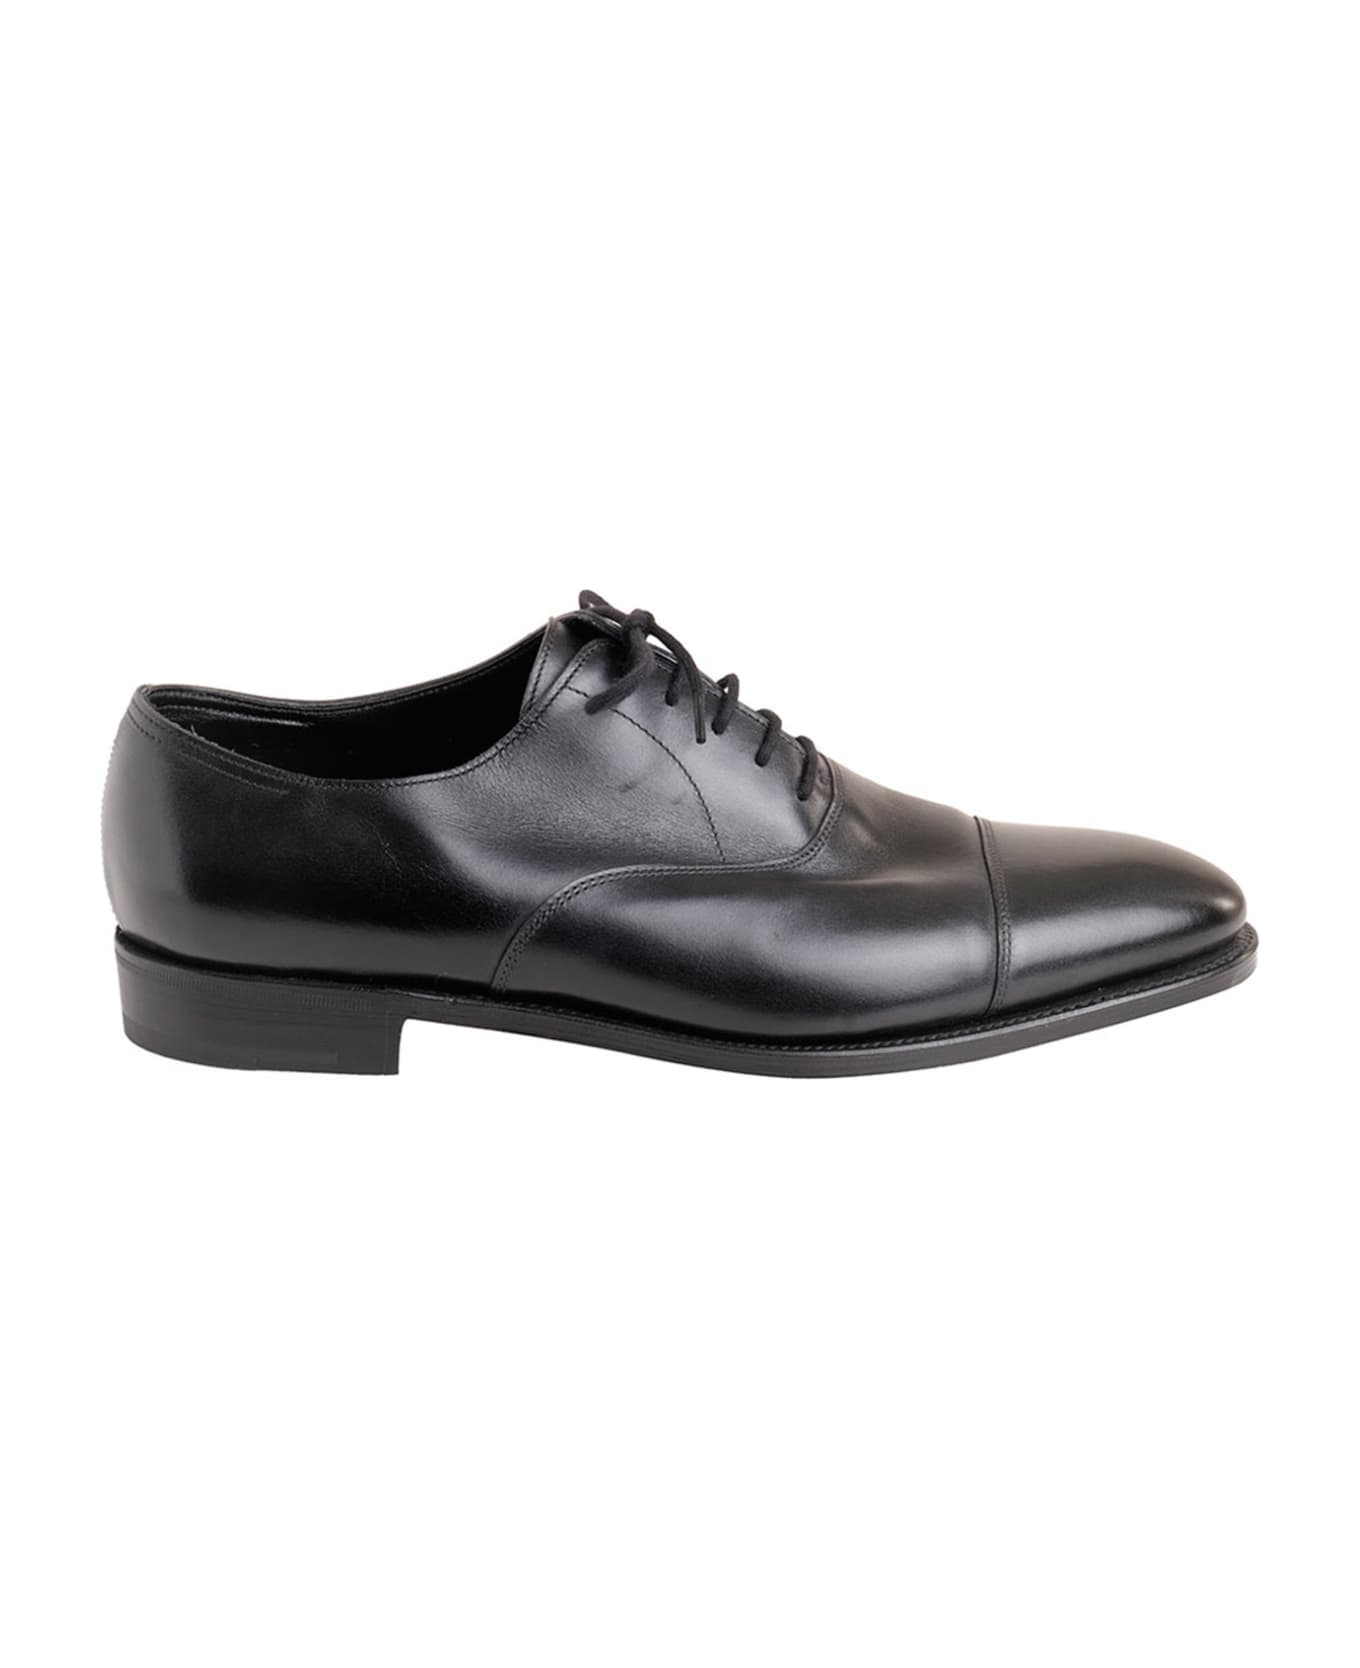 John Lobb City Ii Calf Shoes - Black